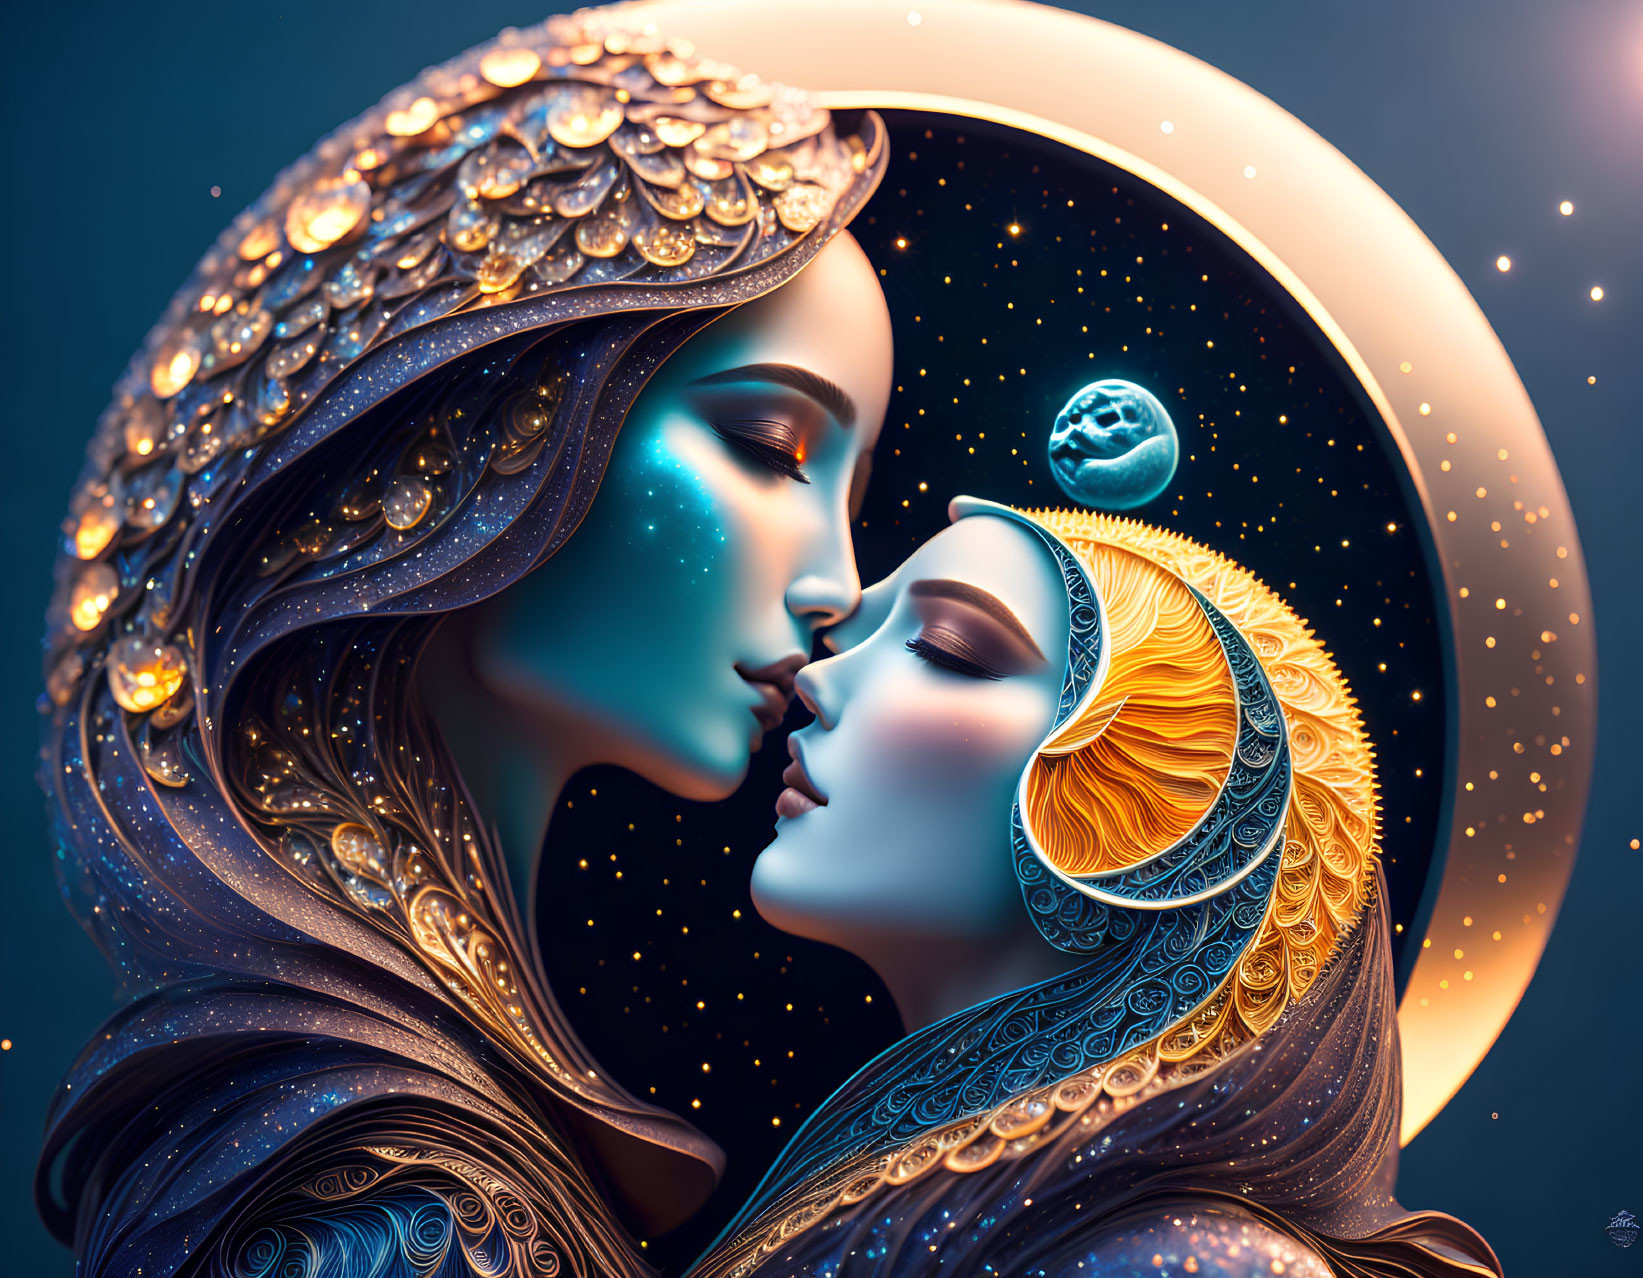 Stylized celestial female figures kiss under crescent moon